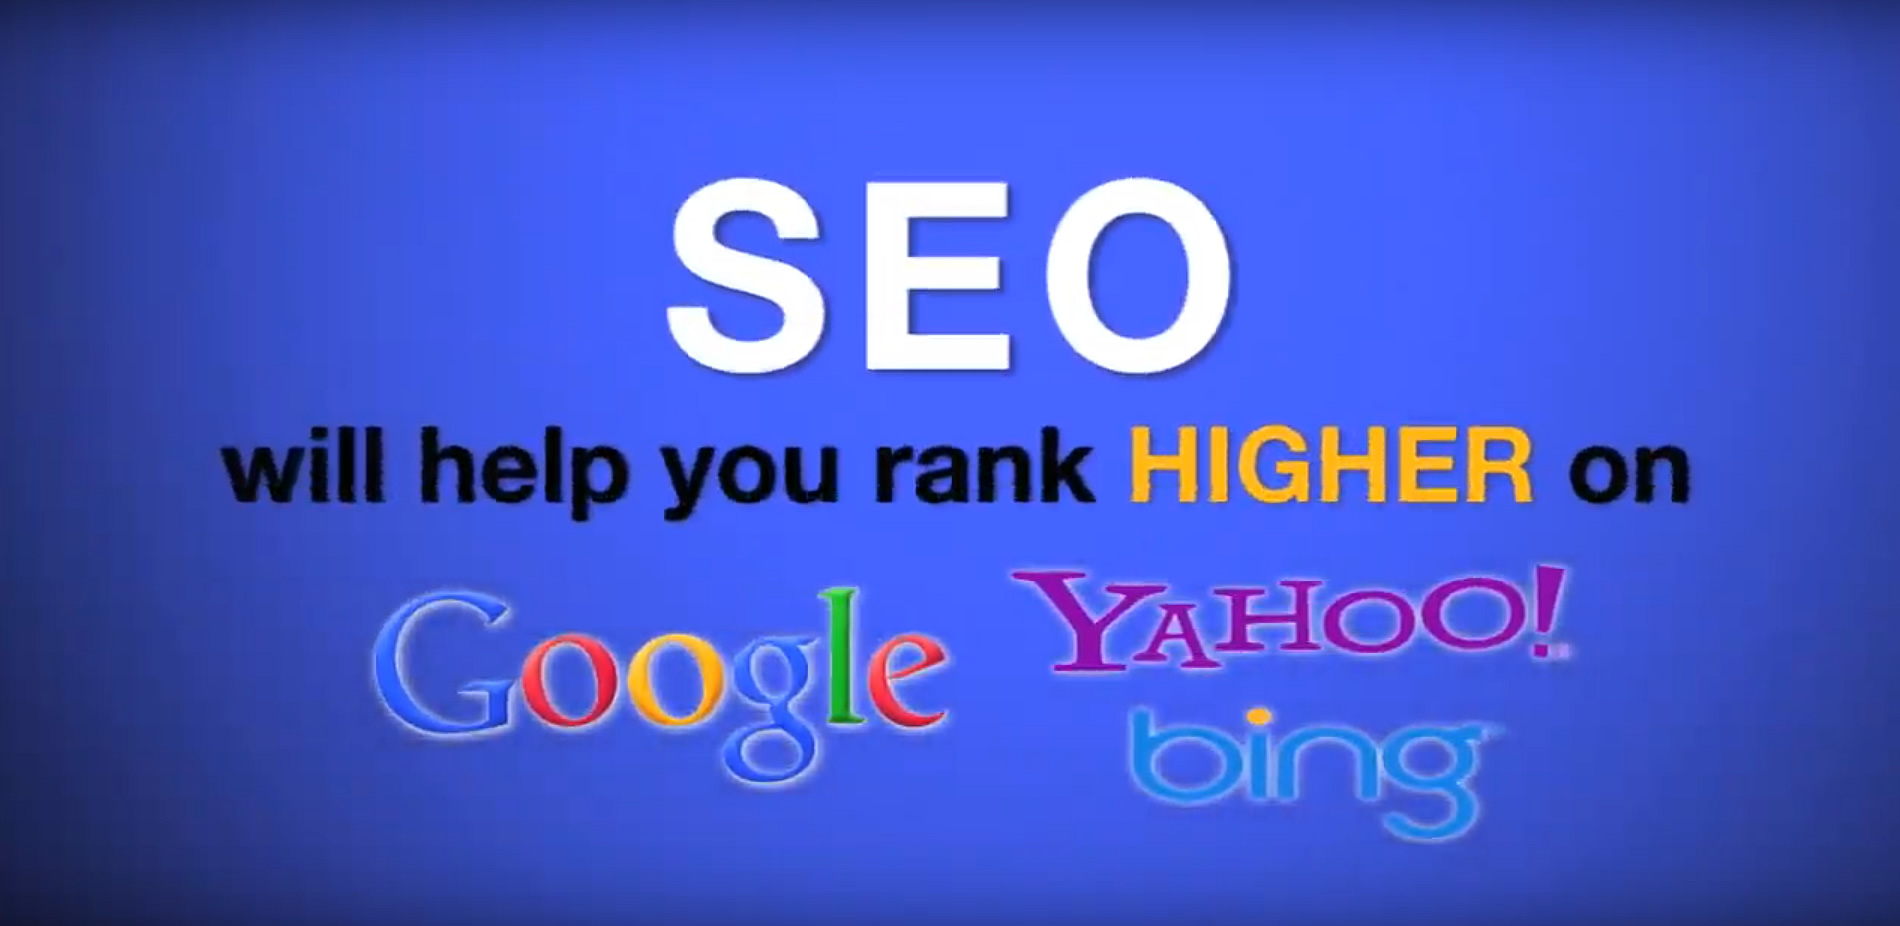 SEO will help you rank higher on Google, Yahoo! and Bing